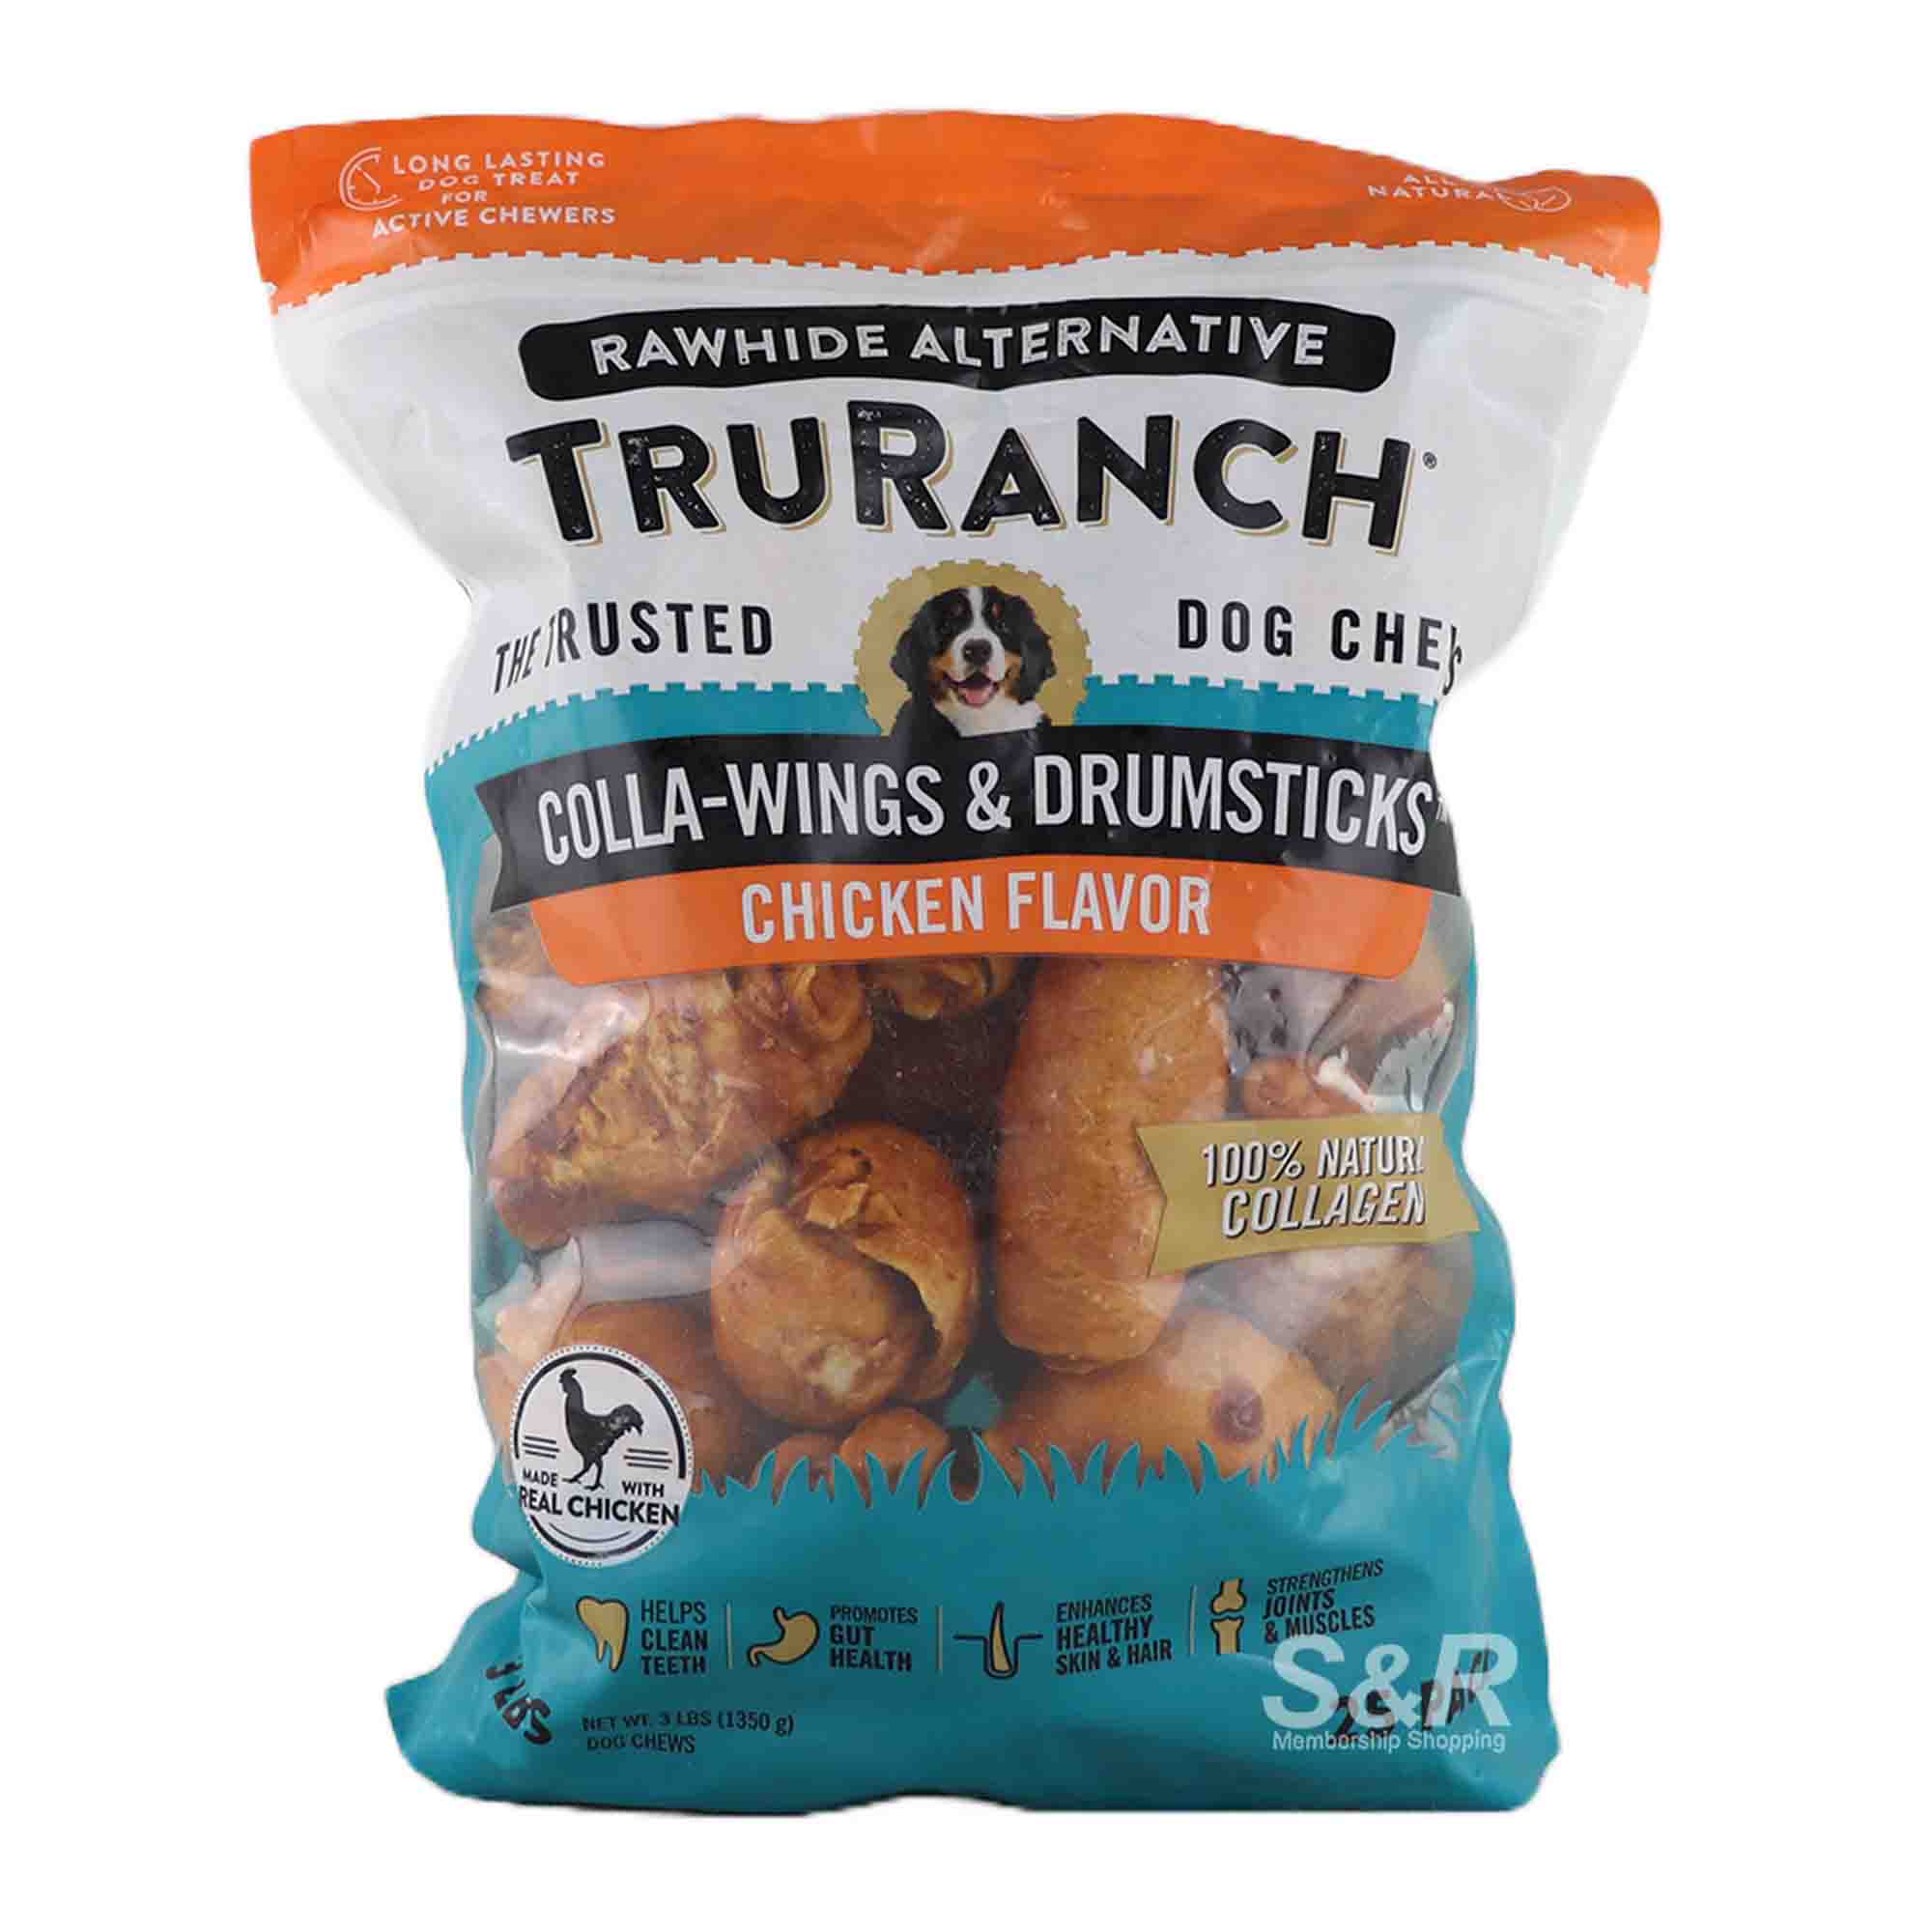 TruRanch Colla-Wings & Drumsticks Chicken Flavor Rawhide Alternative Dog Treats 25pcs